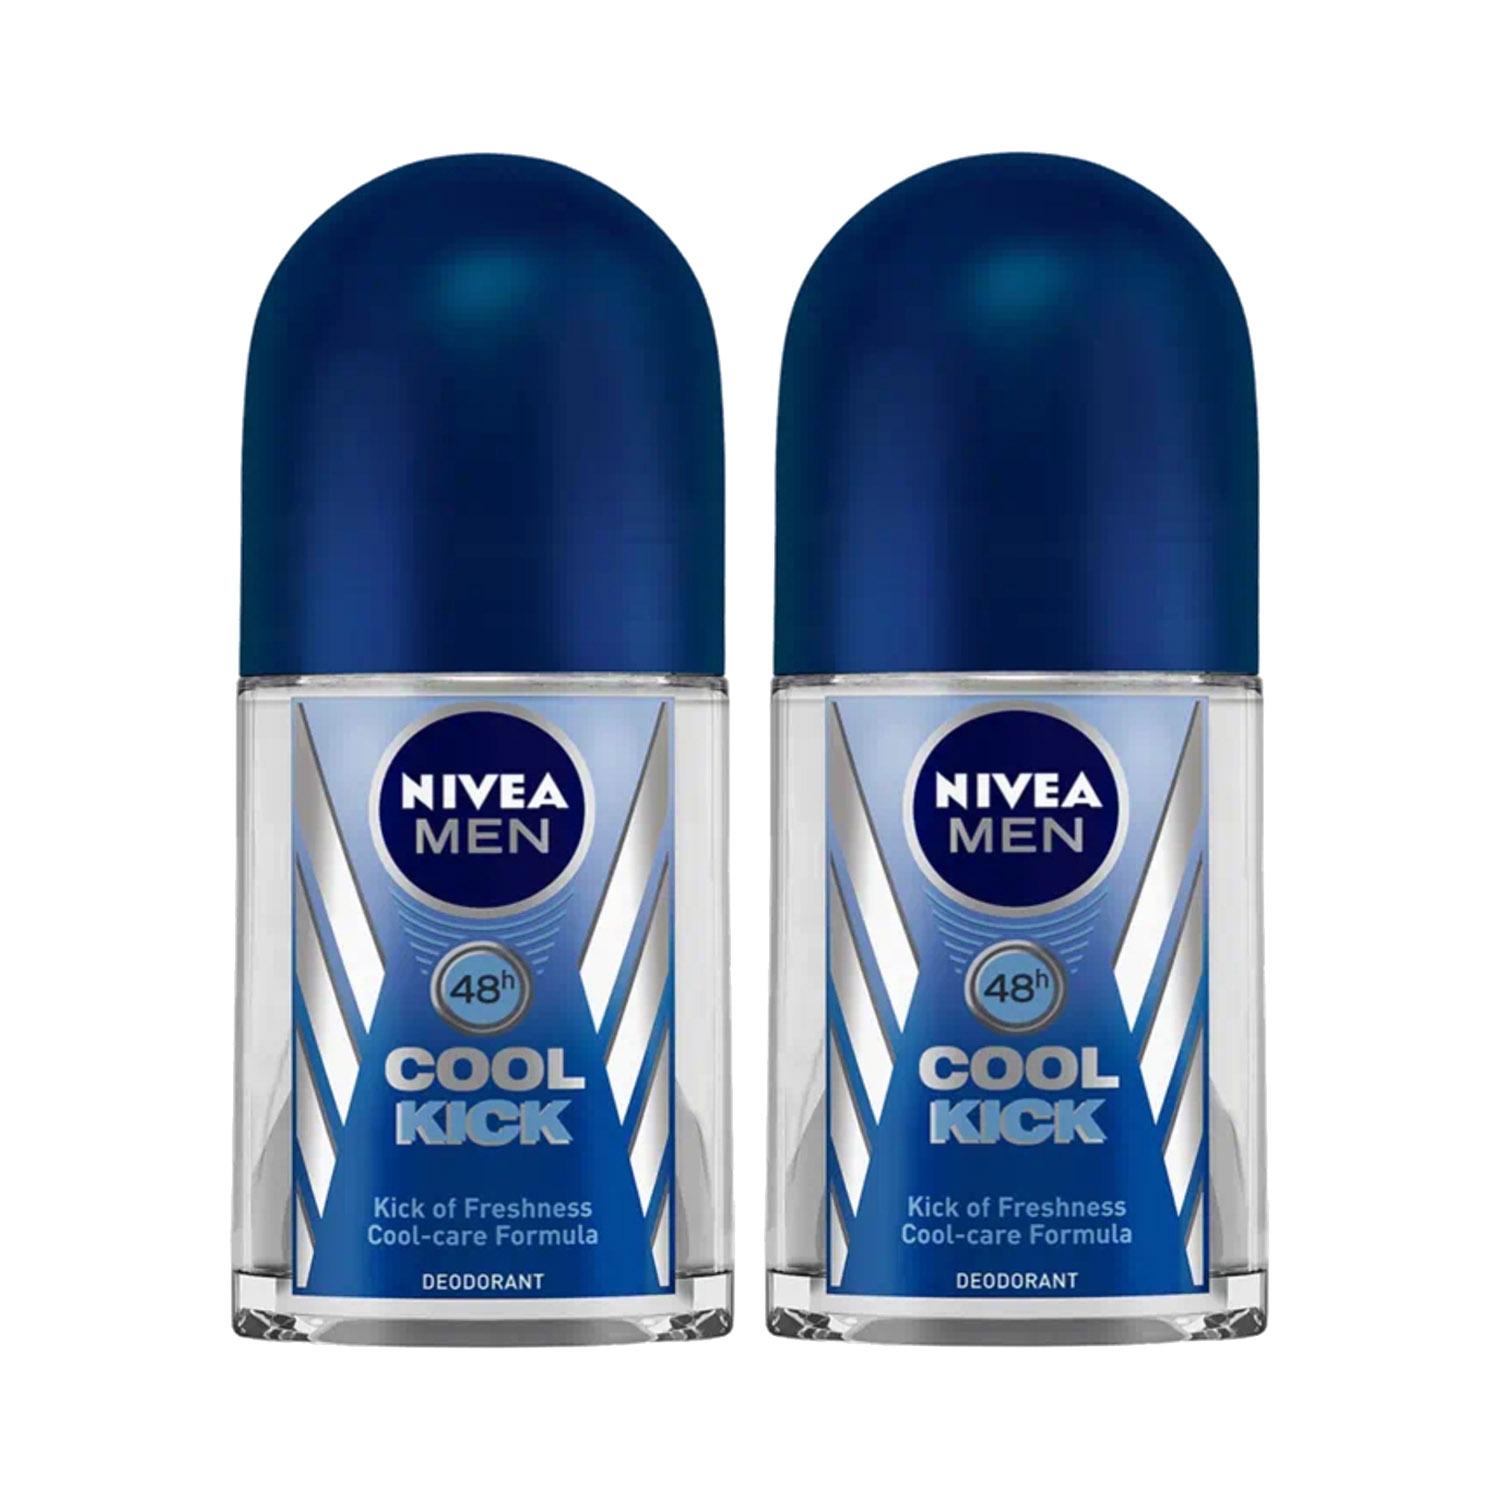 Nivea Nfm Cool Kick Roll On (50ml) Pack of 2 Combo